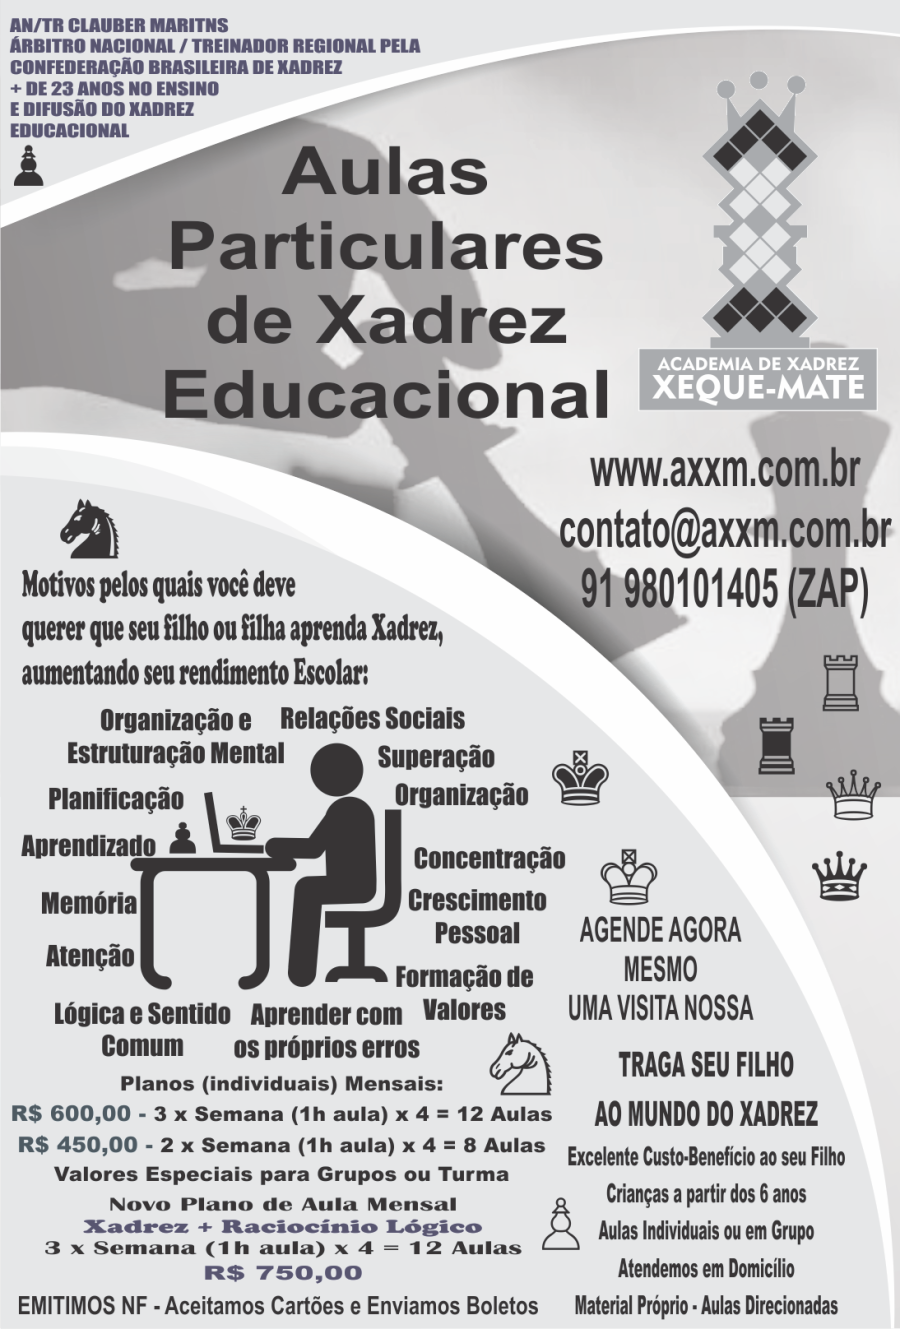 AULAS PARTICULARES DE XADREZ EDUCACIONAL – Professor Clauber Martins